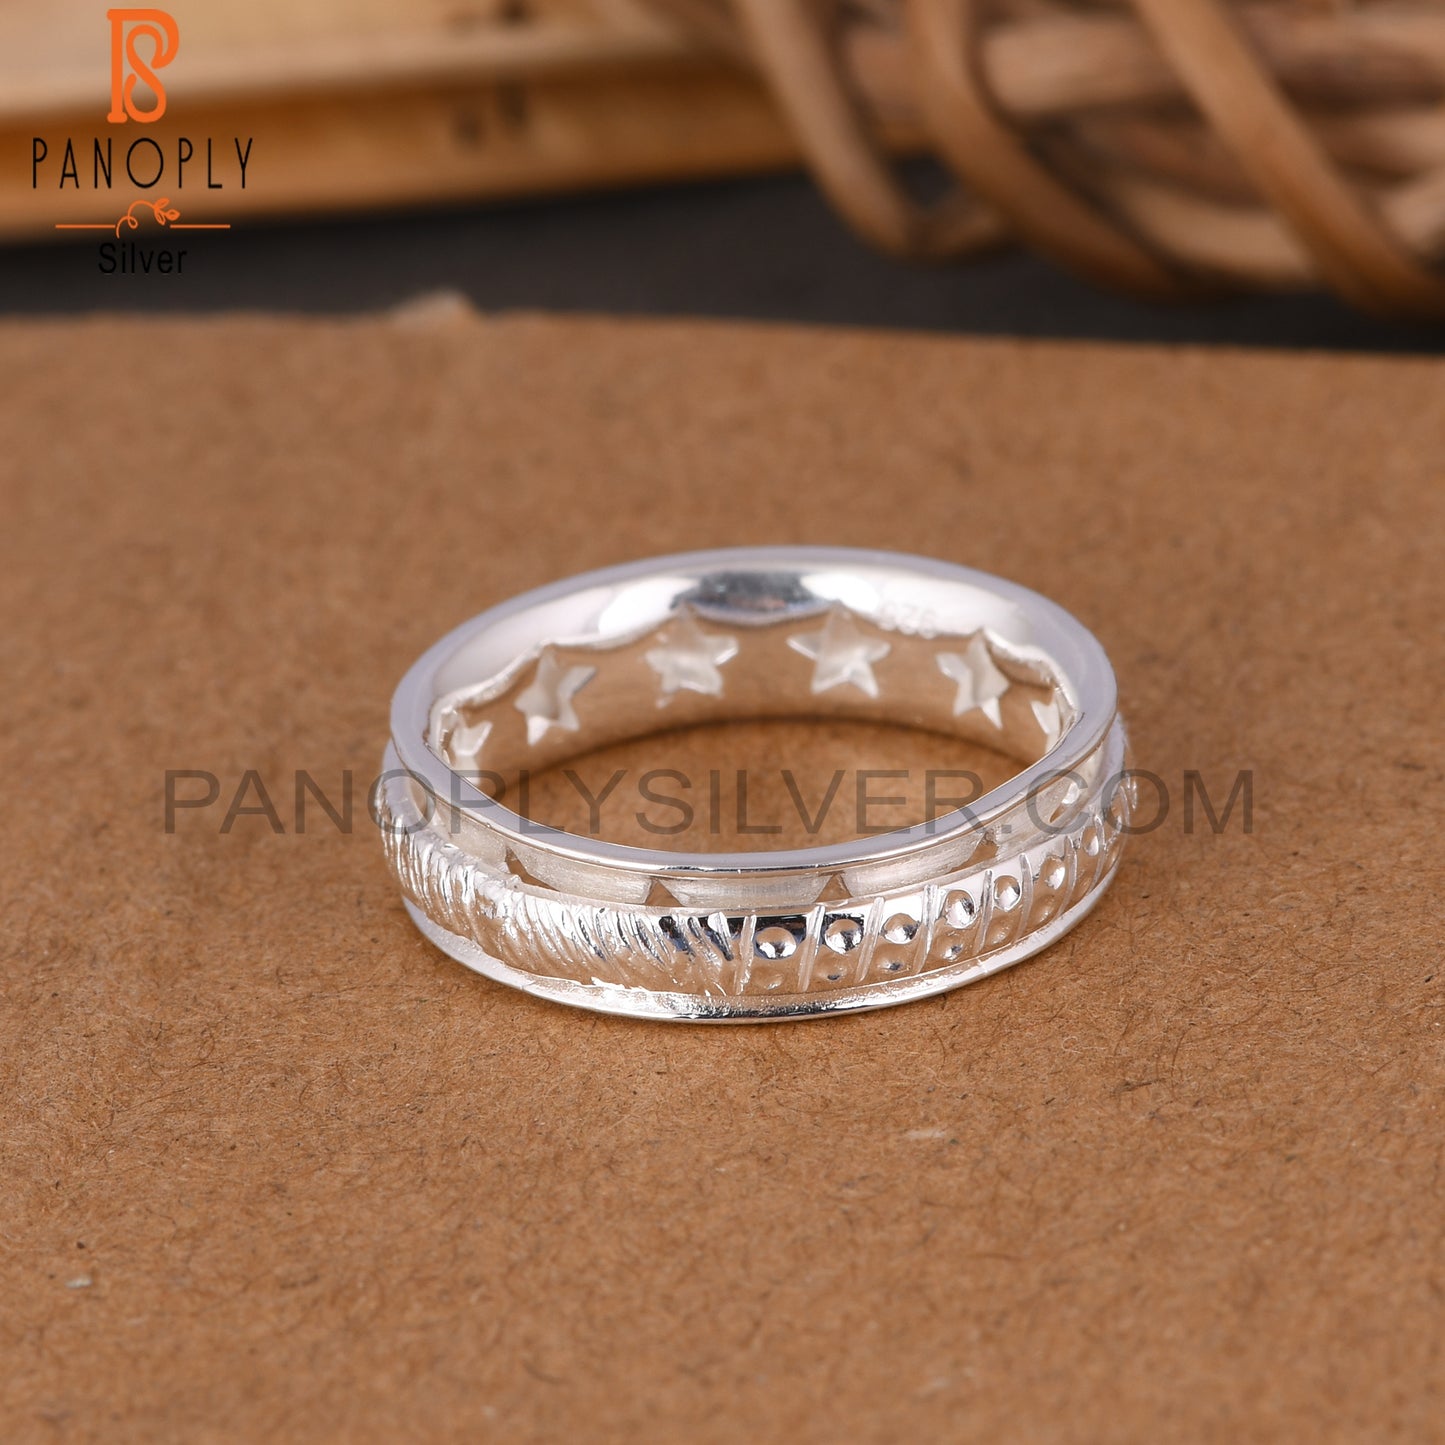 Handmade 925 Sterling Silver Spinner Texture Ring